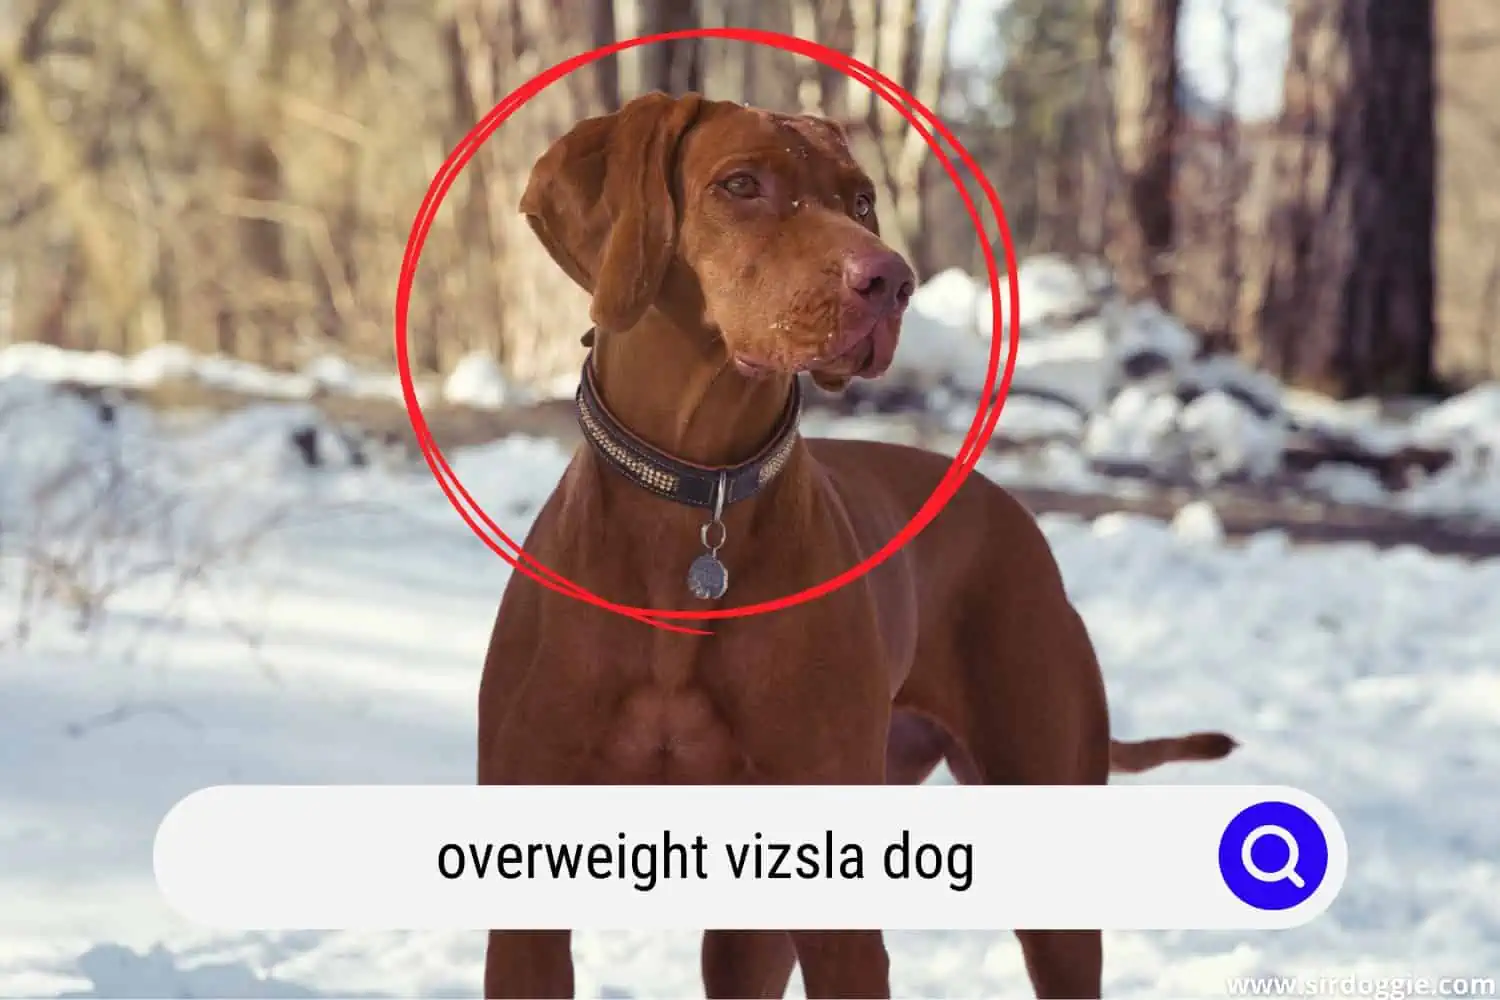 An overweight vizsla standing in a snowy surroundings